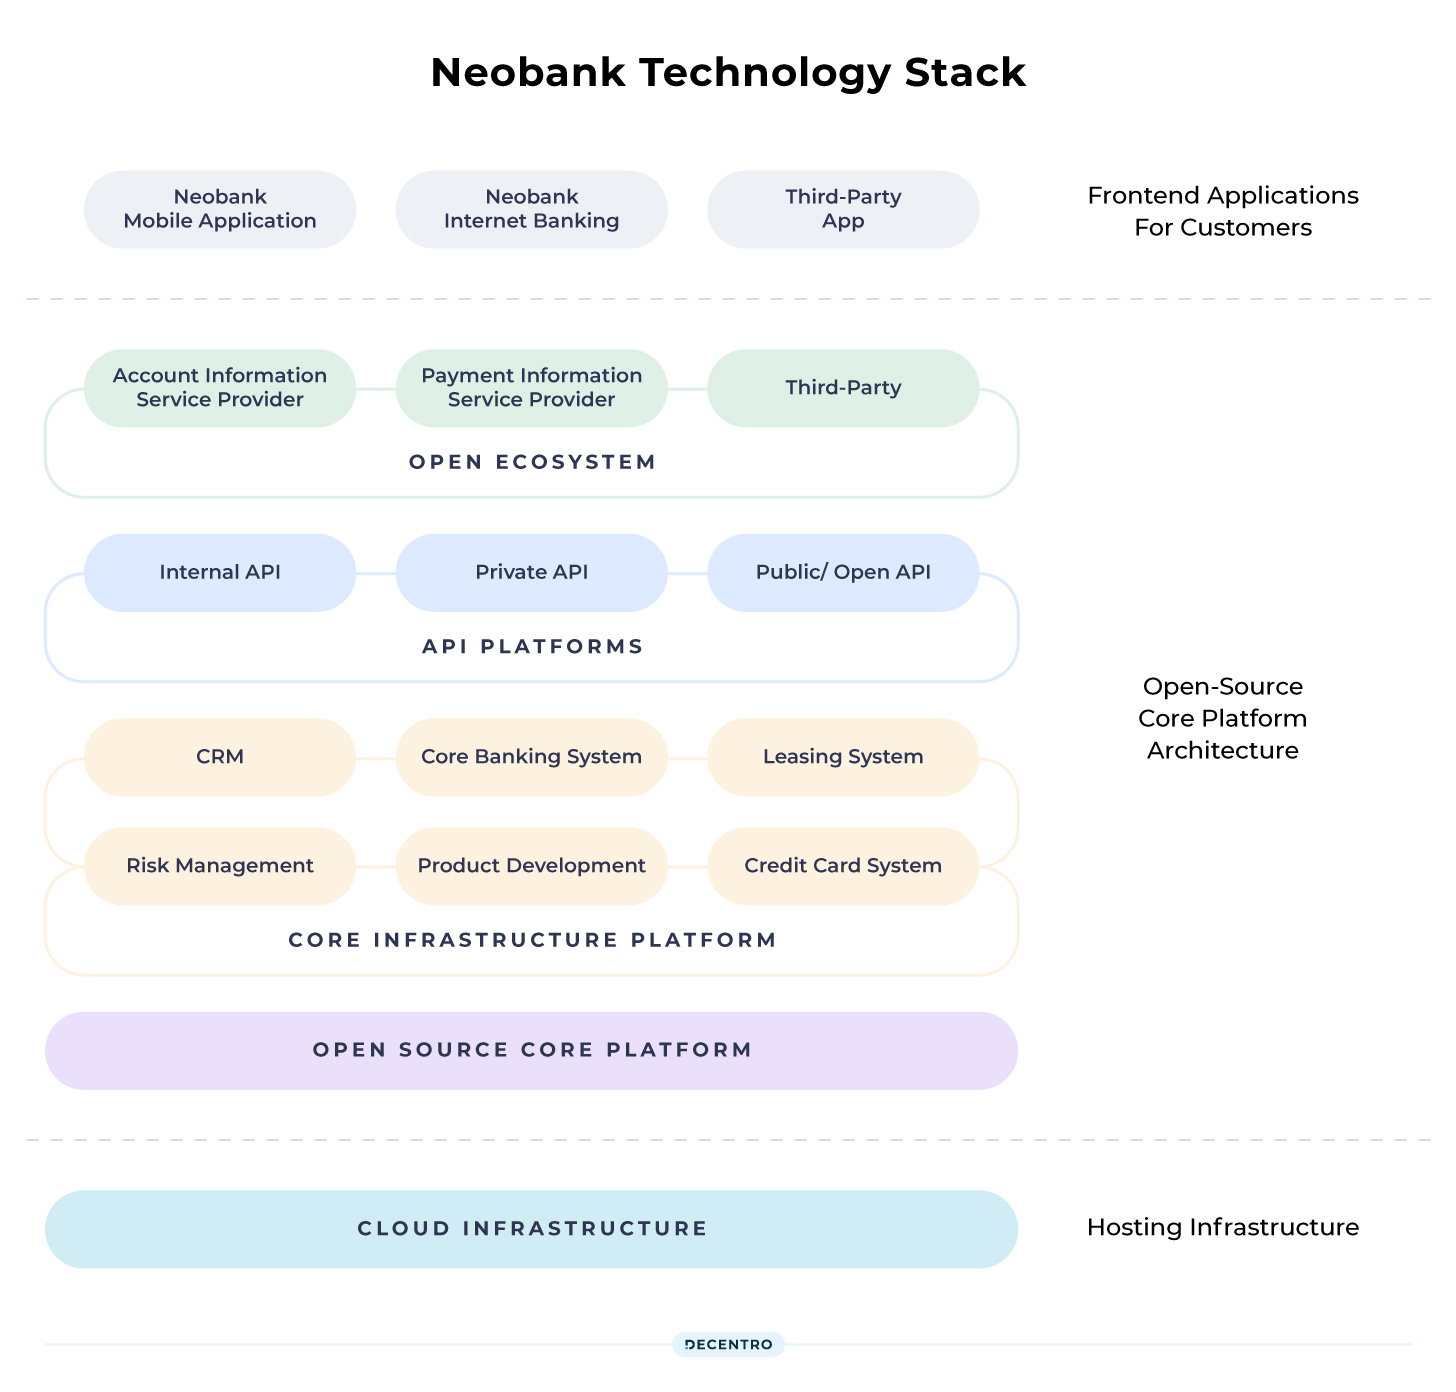 Technology stack for Neobank